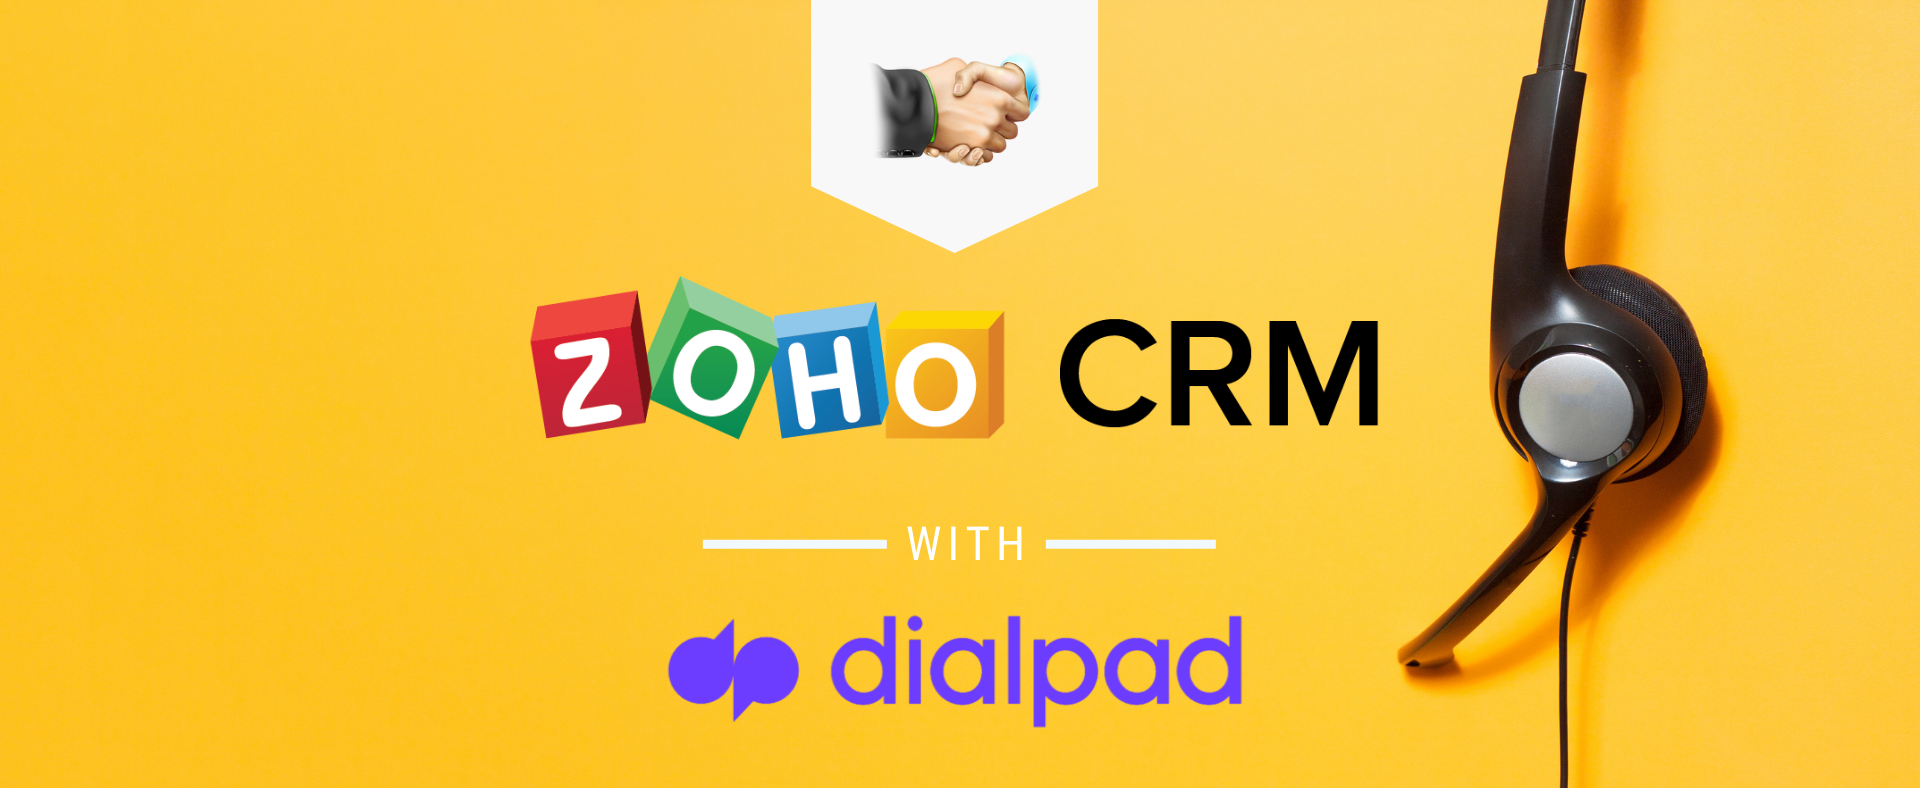 Zoho CRM - DialPad Integration